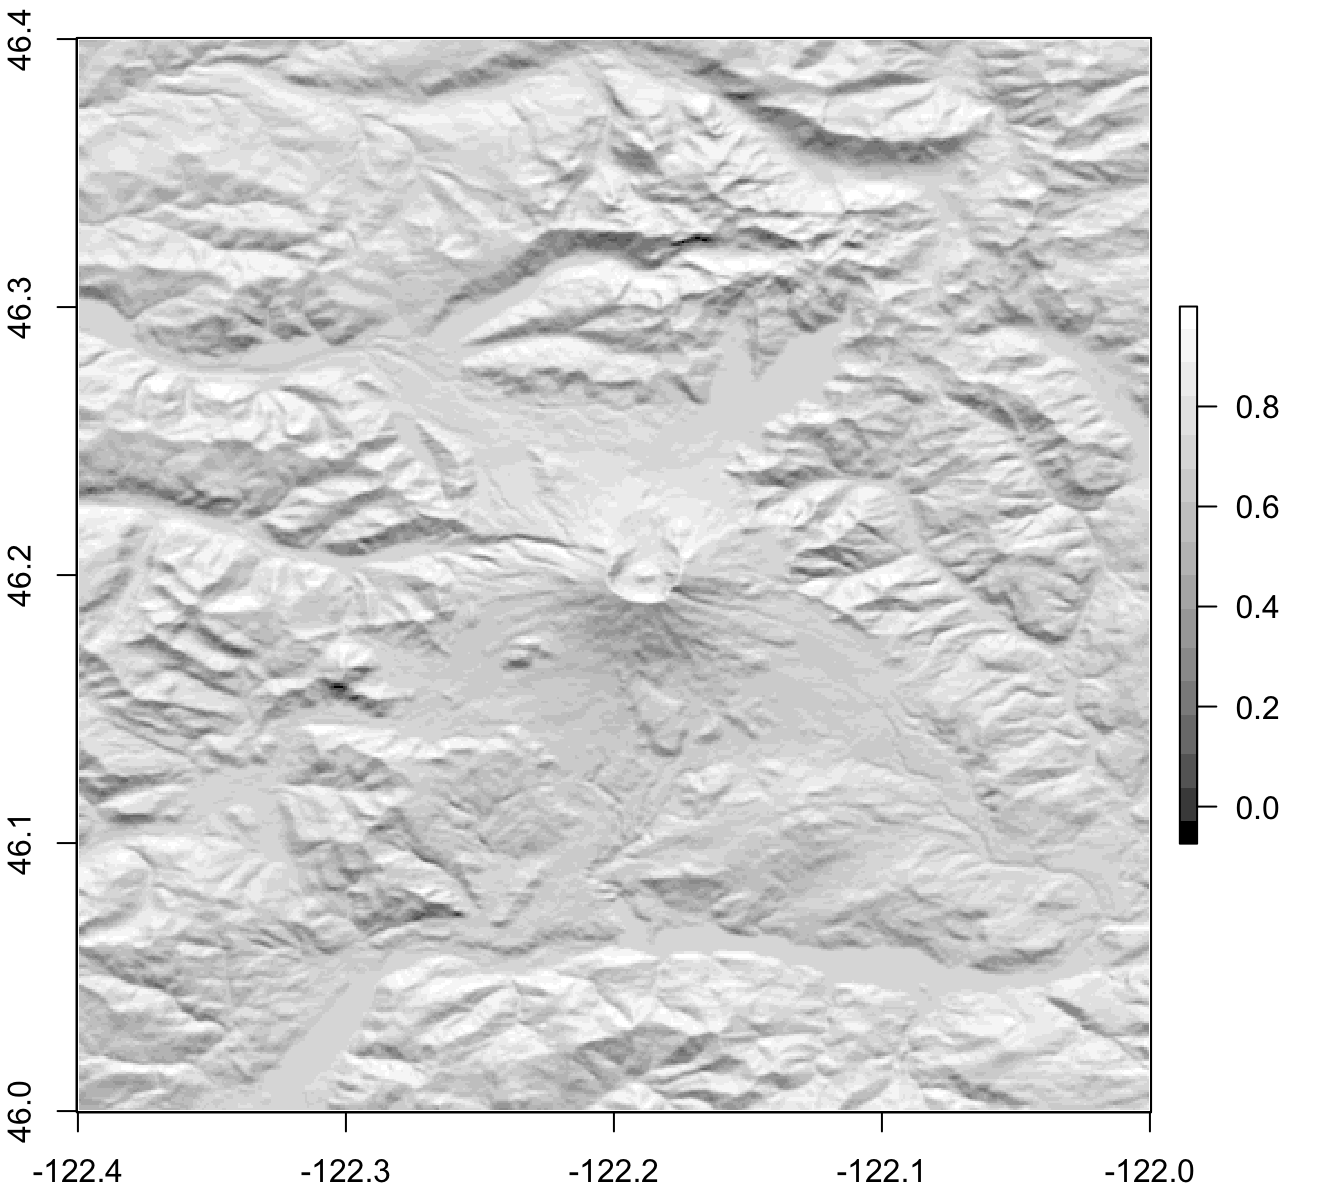 *Hillshade* generated with Mount St. Helens' SRTM elevation data